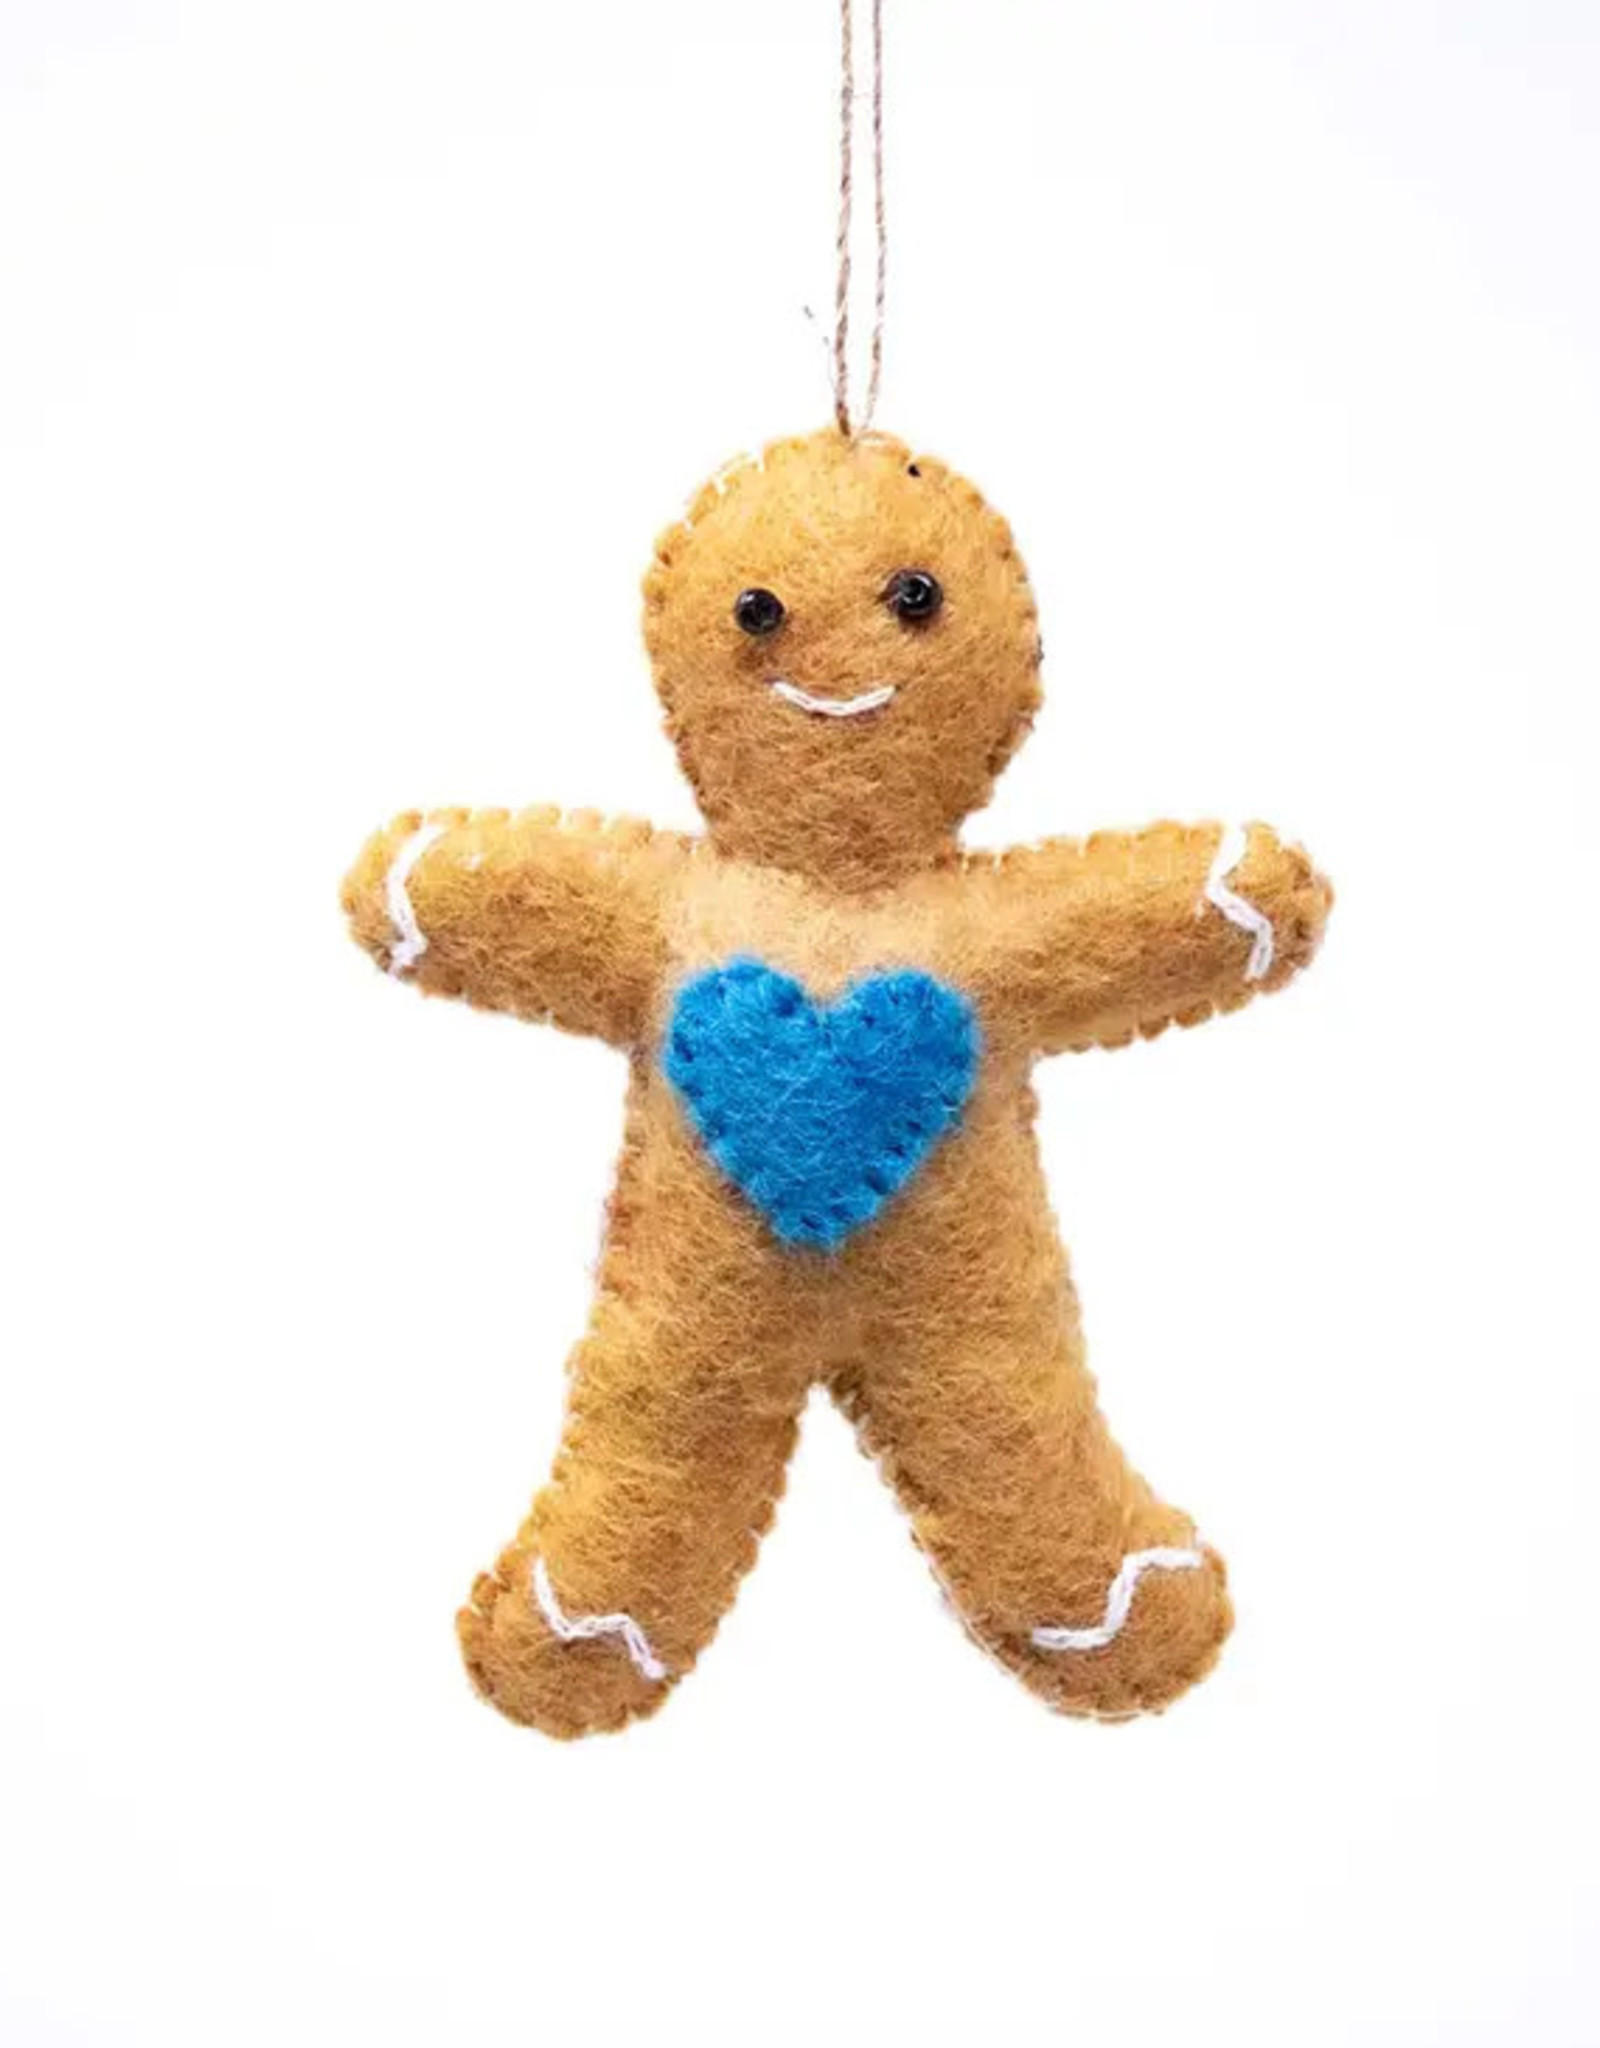 Global Crafts Rainbow Gingerbread Friend Ornament